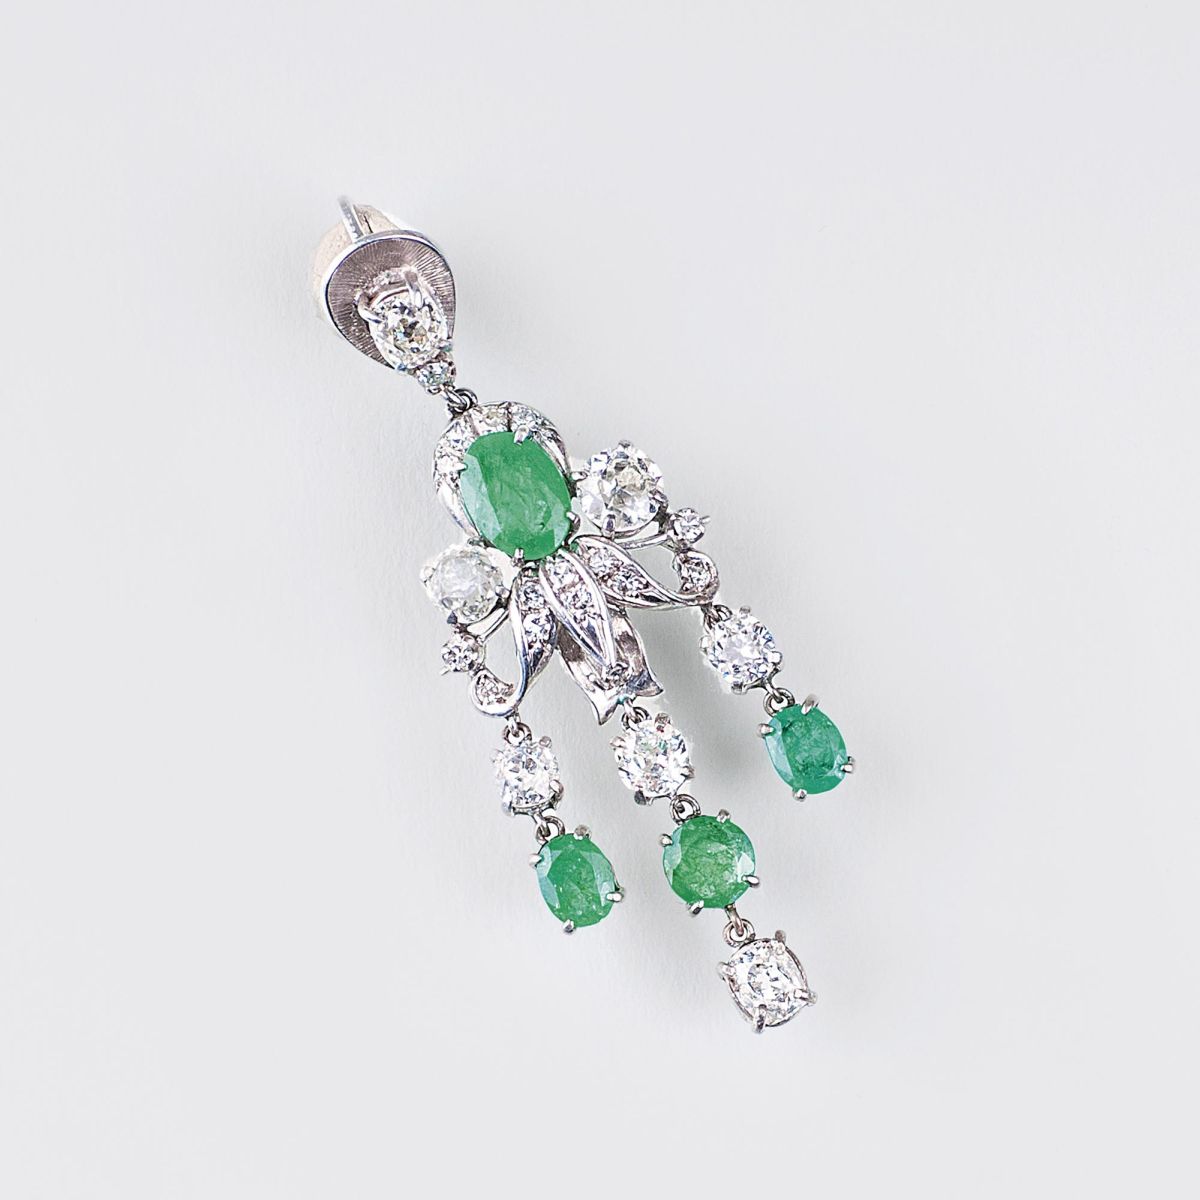 An Emerald Pendant with Old Cut Diamonds